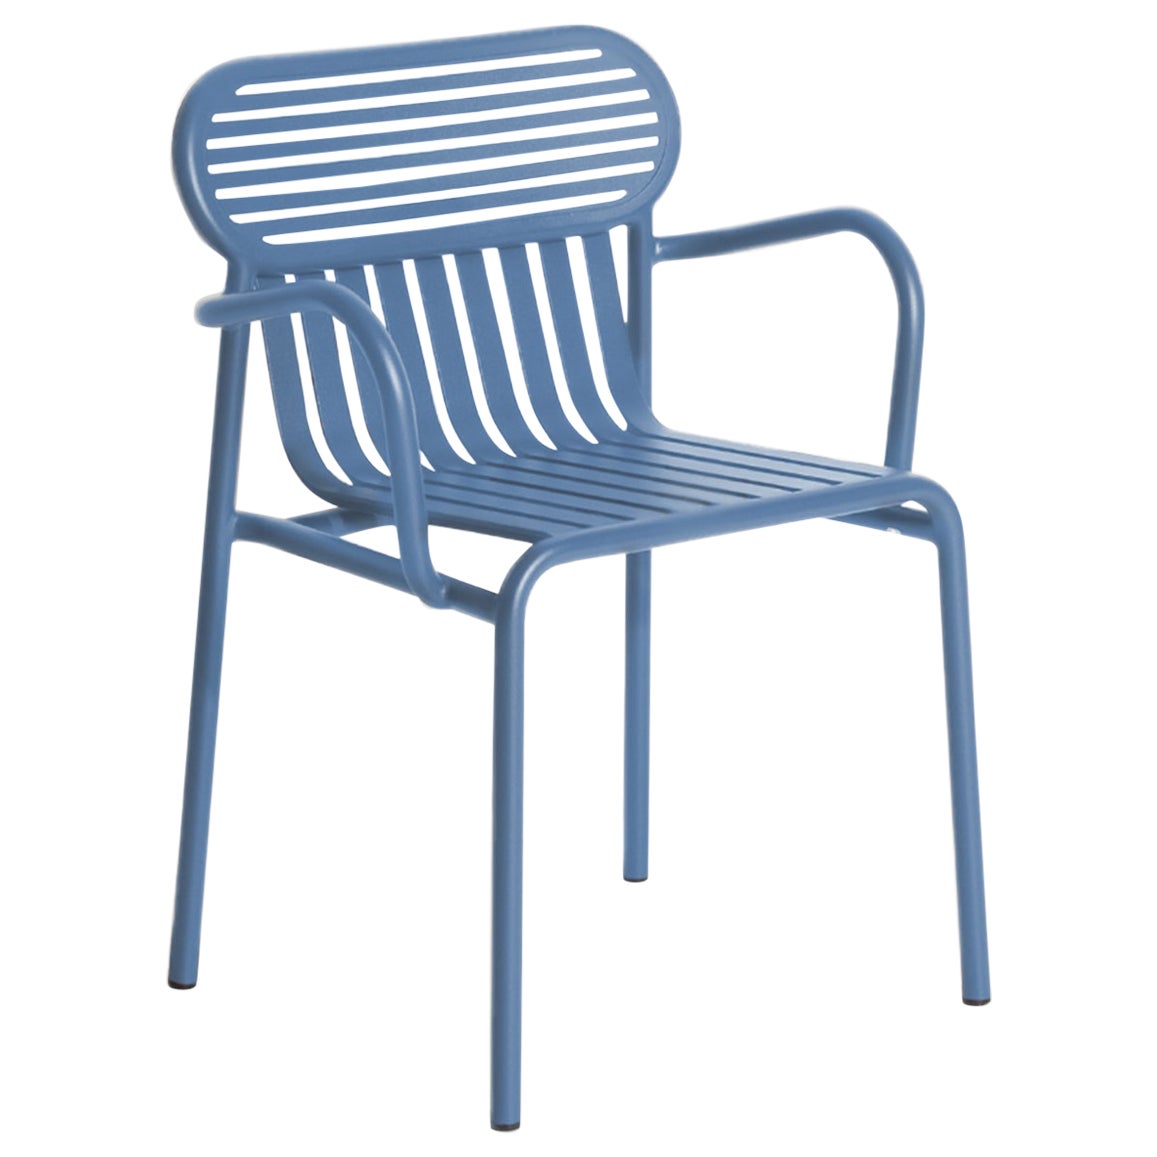 Petite Friture Week-End Bridge Chair in Azur Blue Aluminium, 2017 For Sale